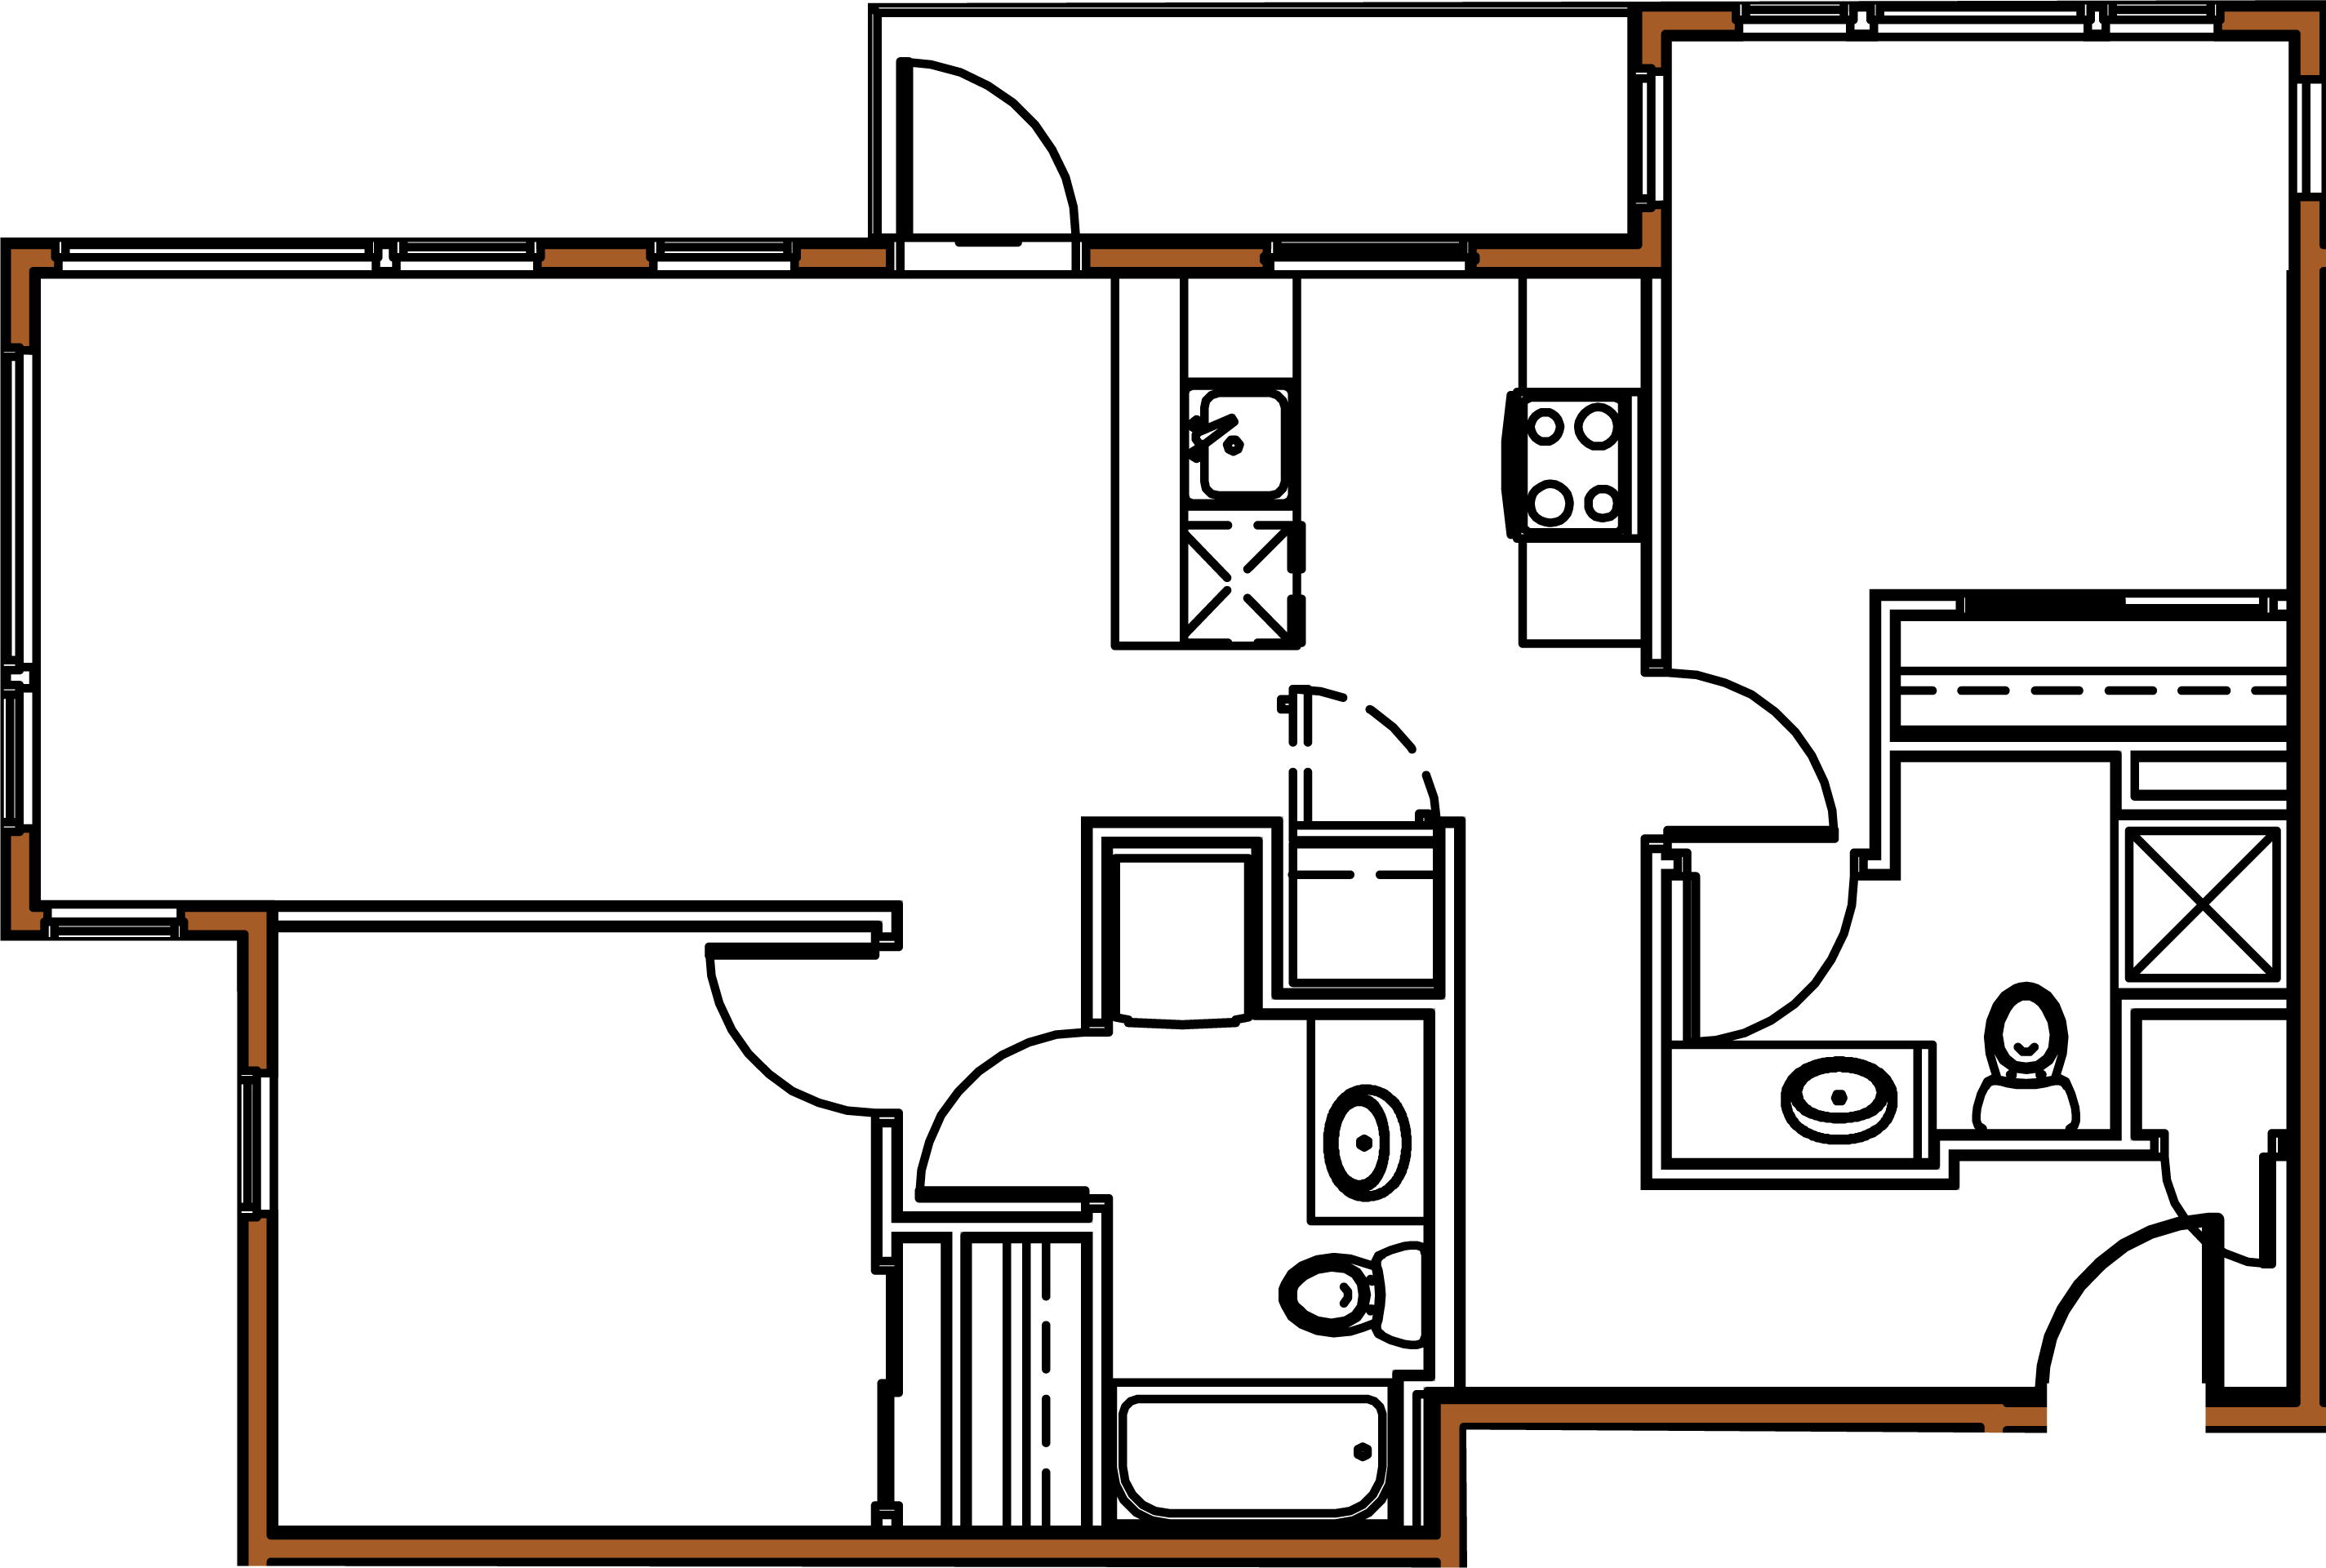 Springwater Flats, 2 Bedroom 2 Bathroom - Floorplan.png